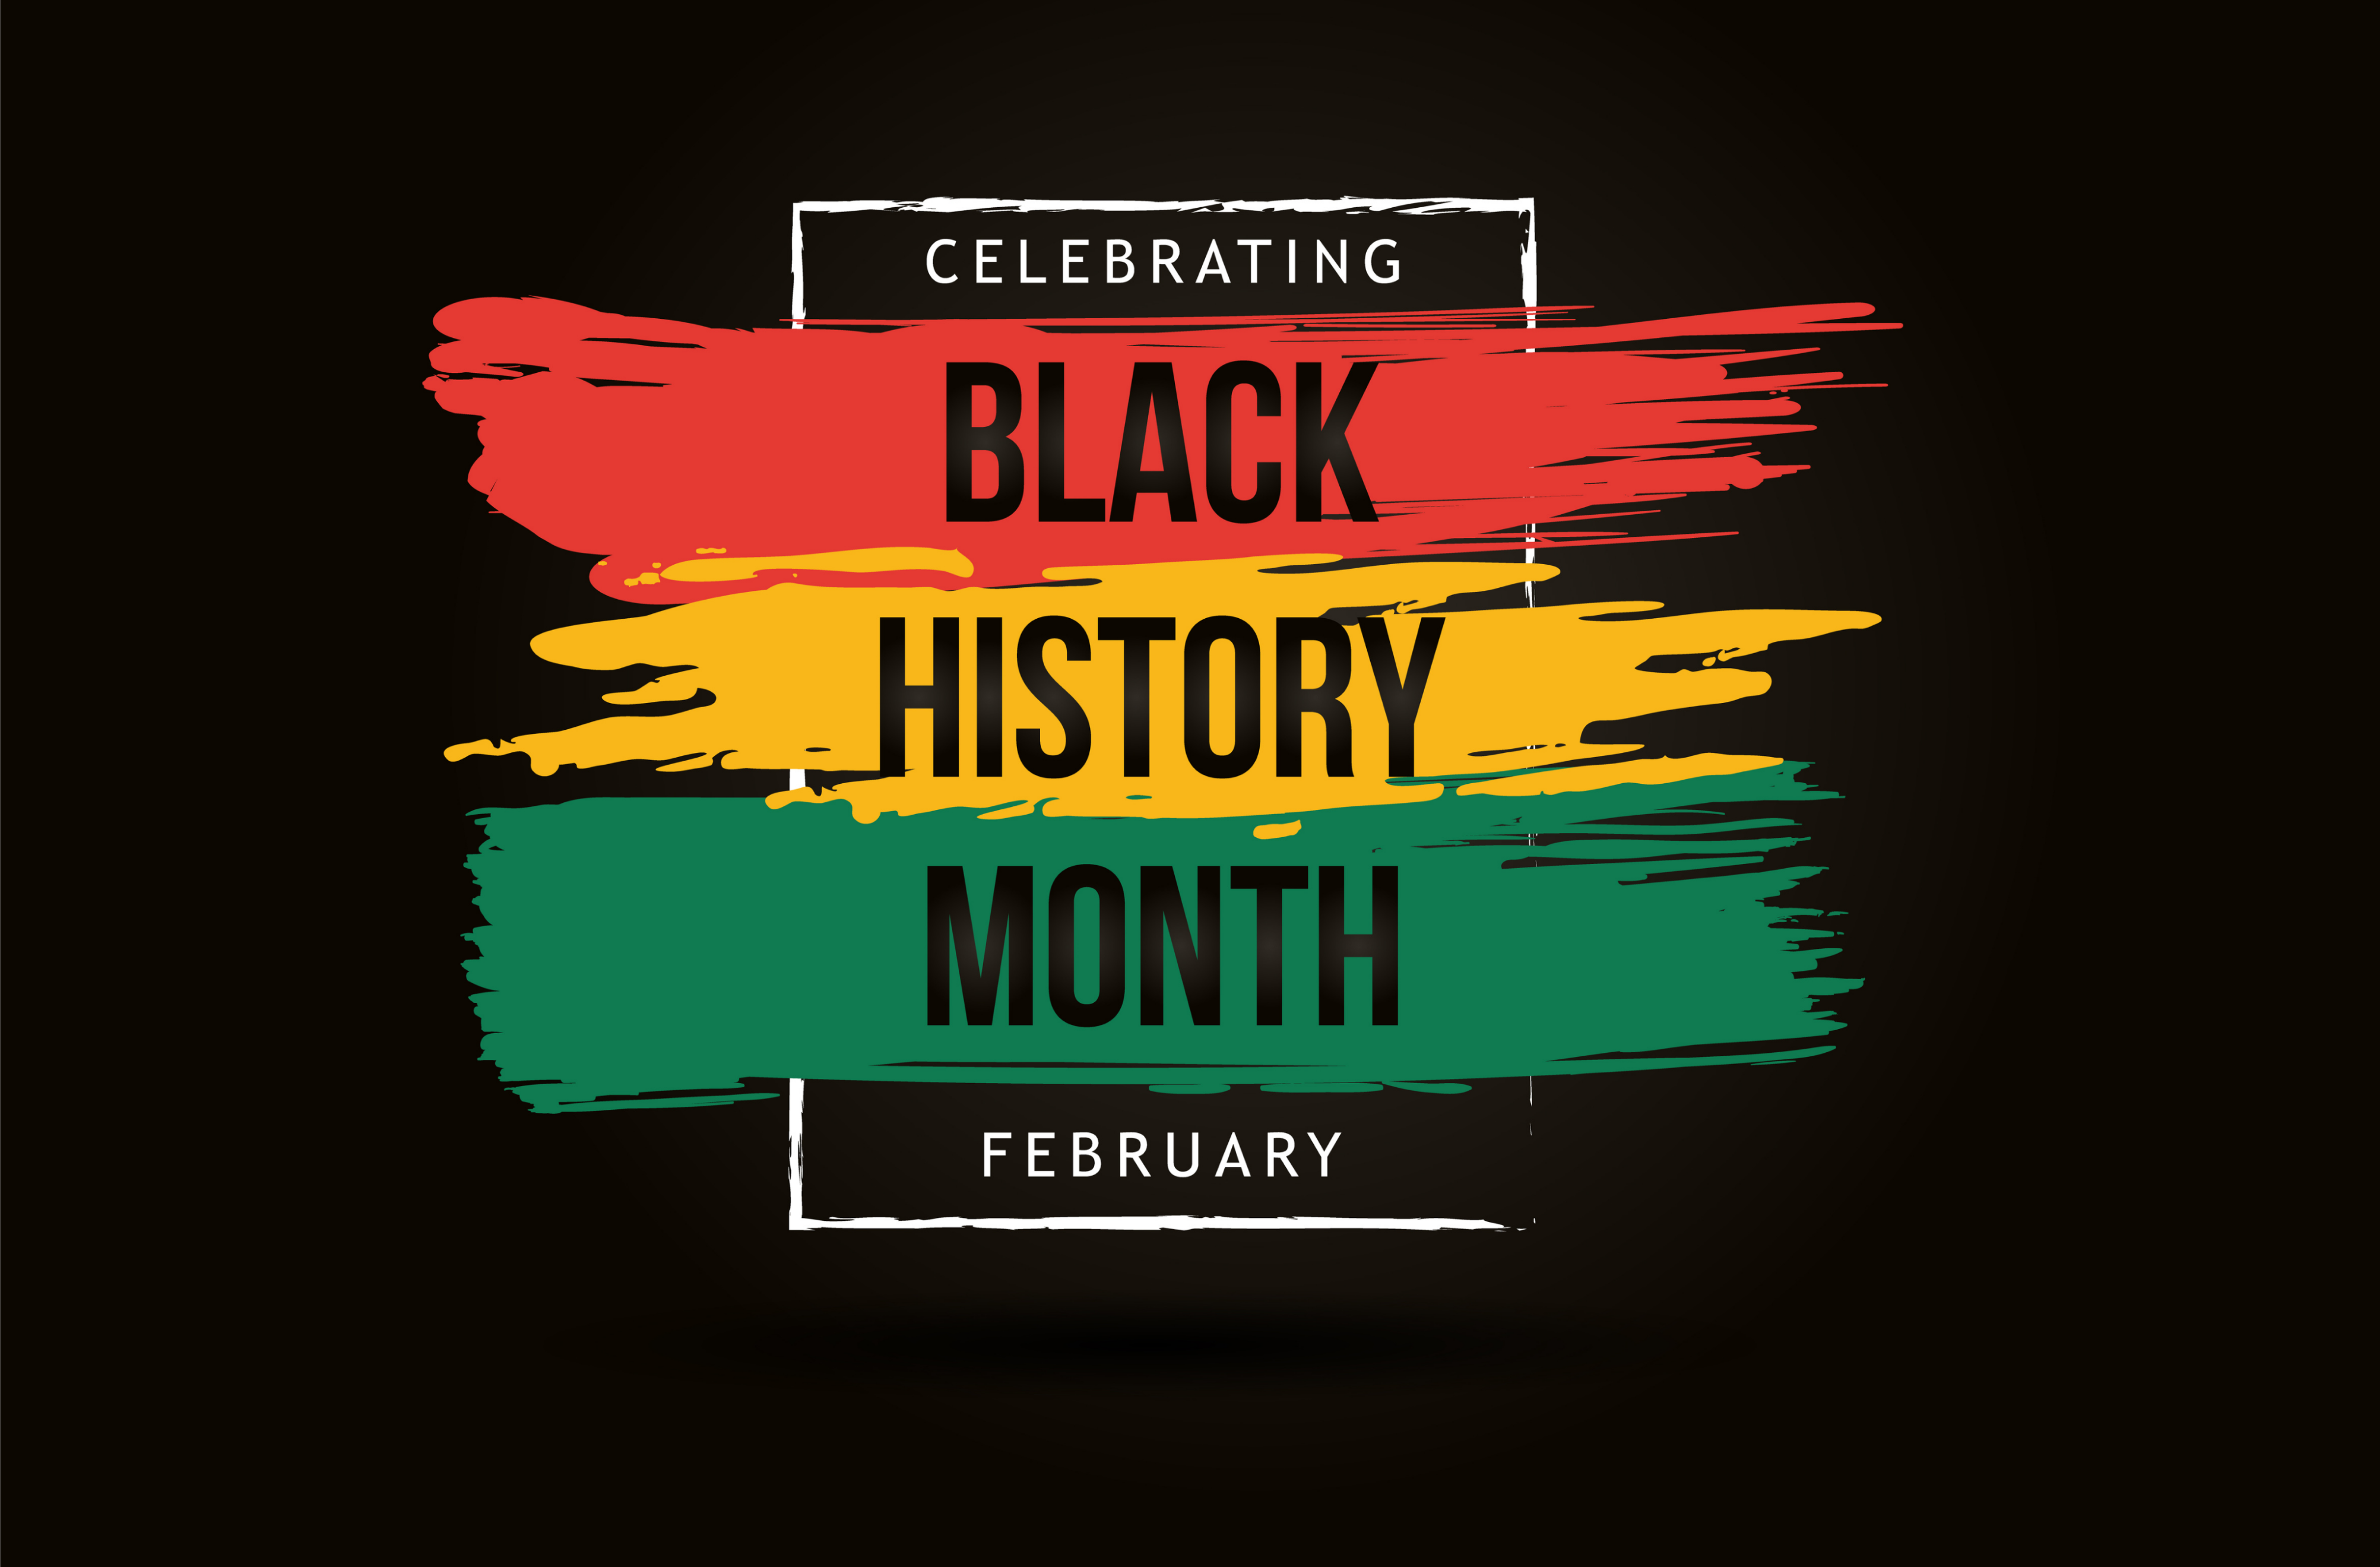 Celebrate Black History Month at UW